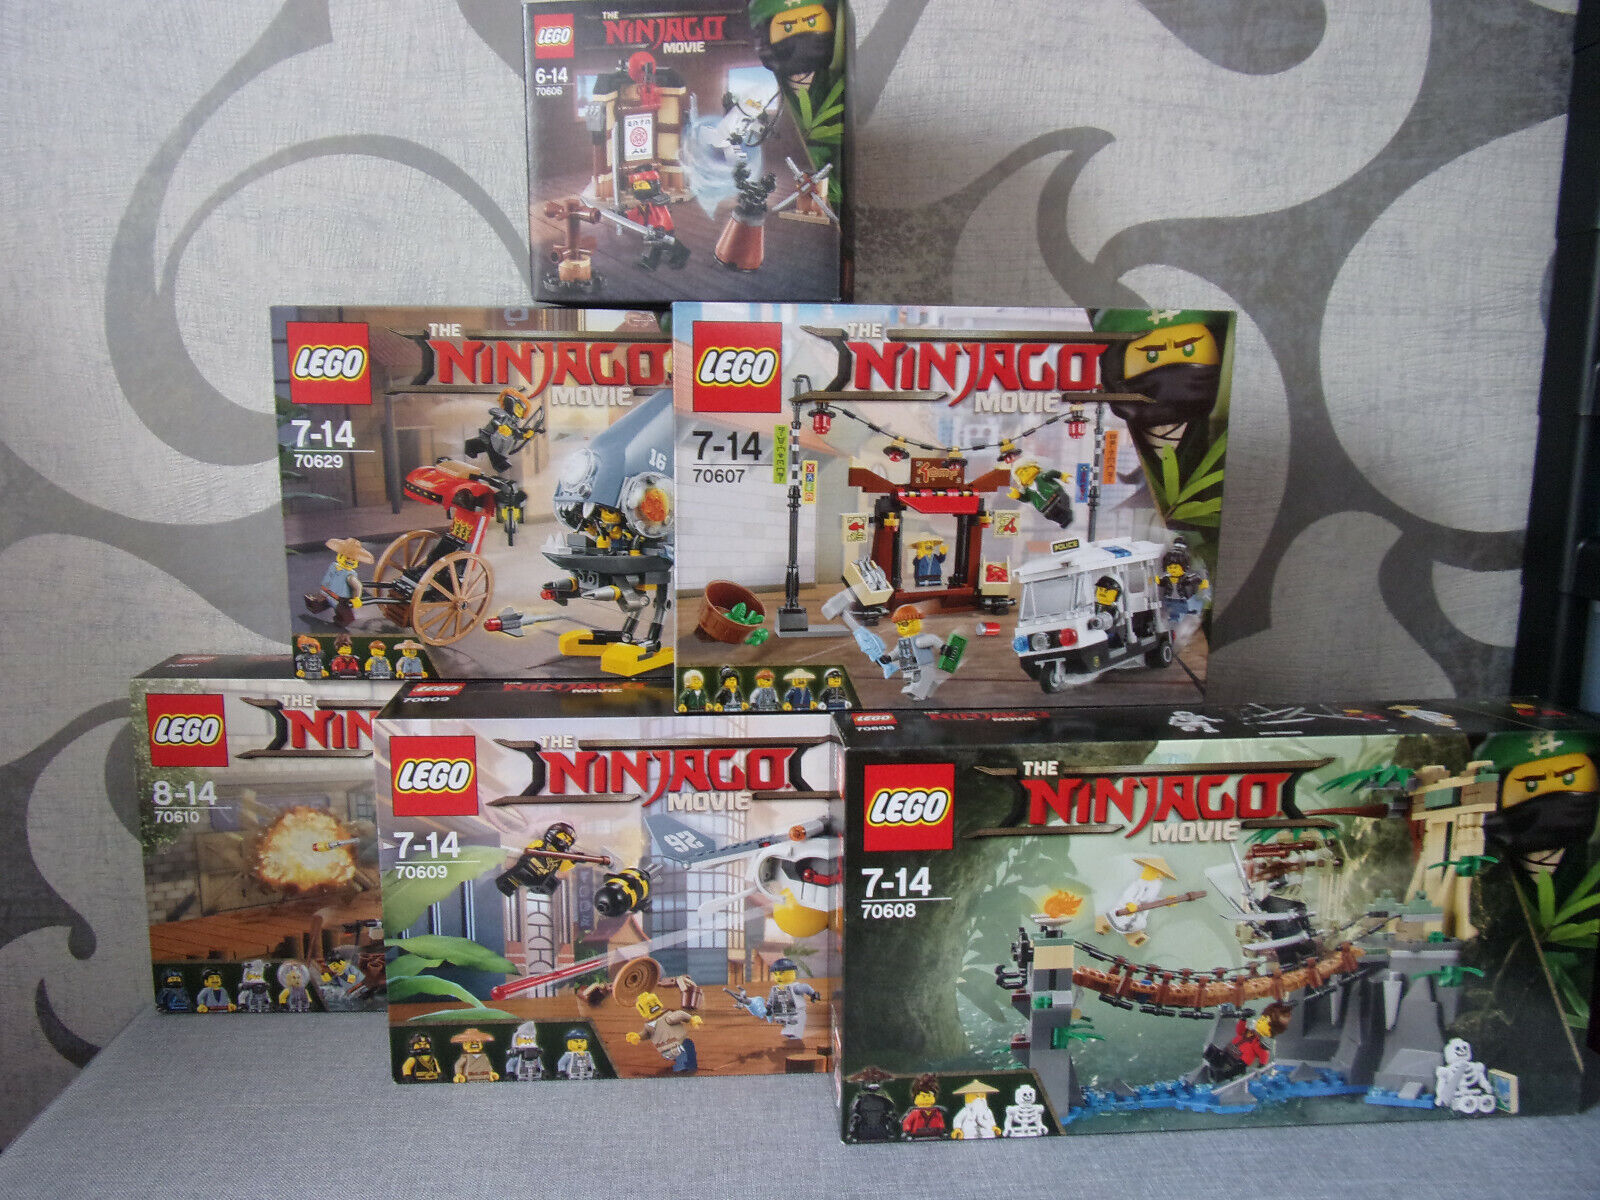 The Lego ninjago Movie - Various Sets for Selection - Nip | eBay